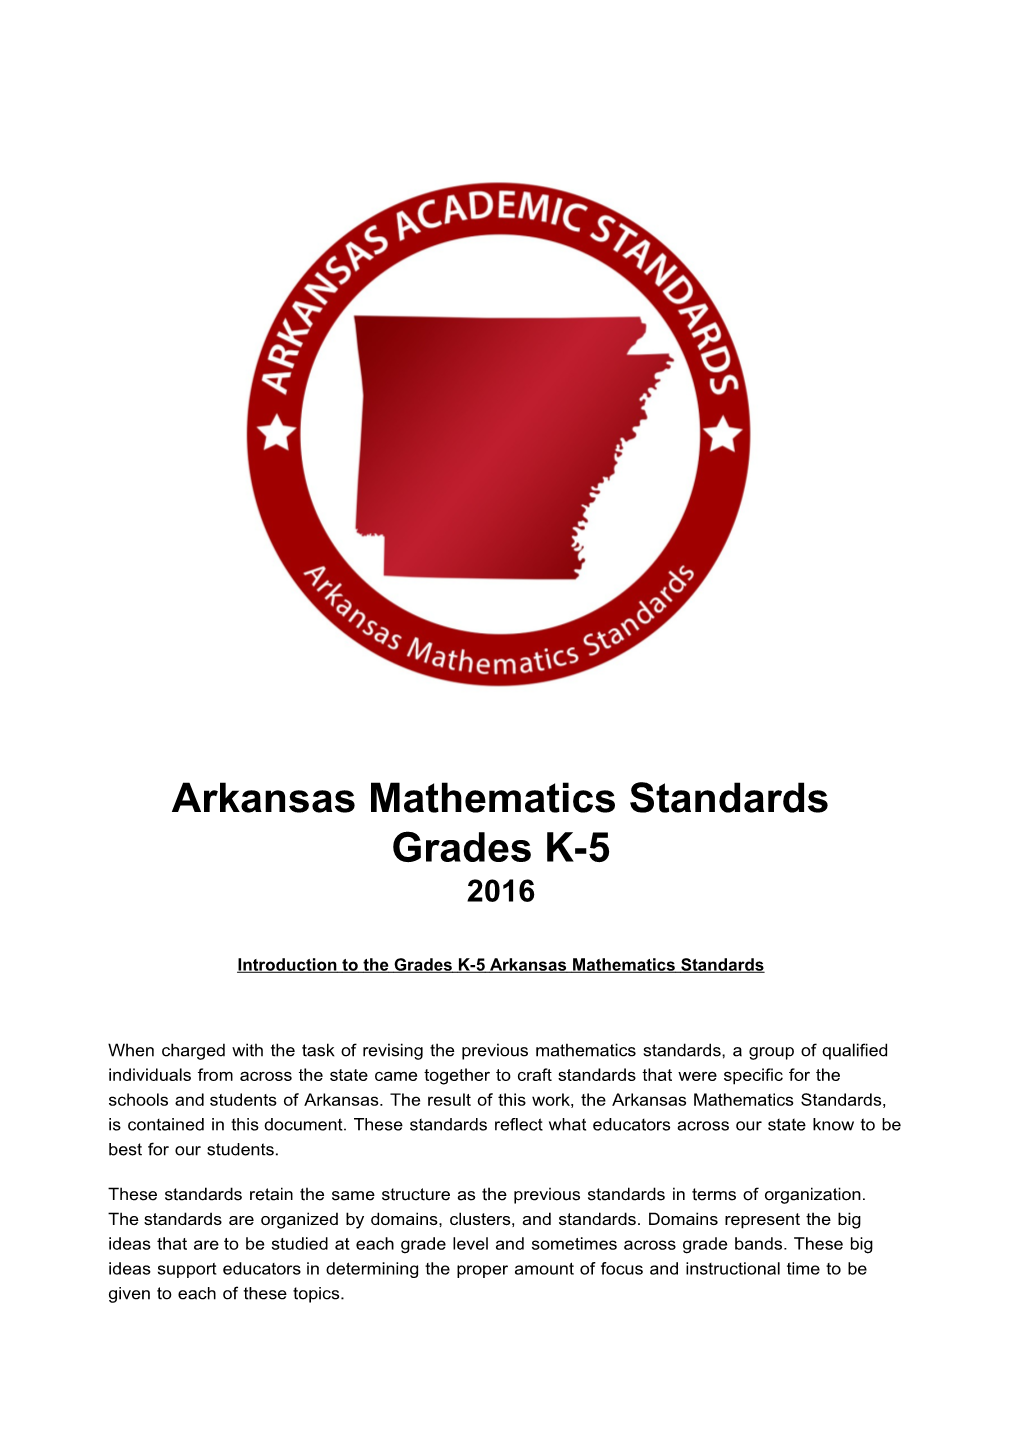 Introduction to the Grades K-5 Arkansas Mathematics Standards